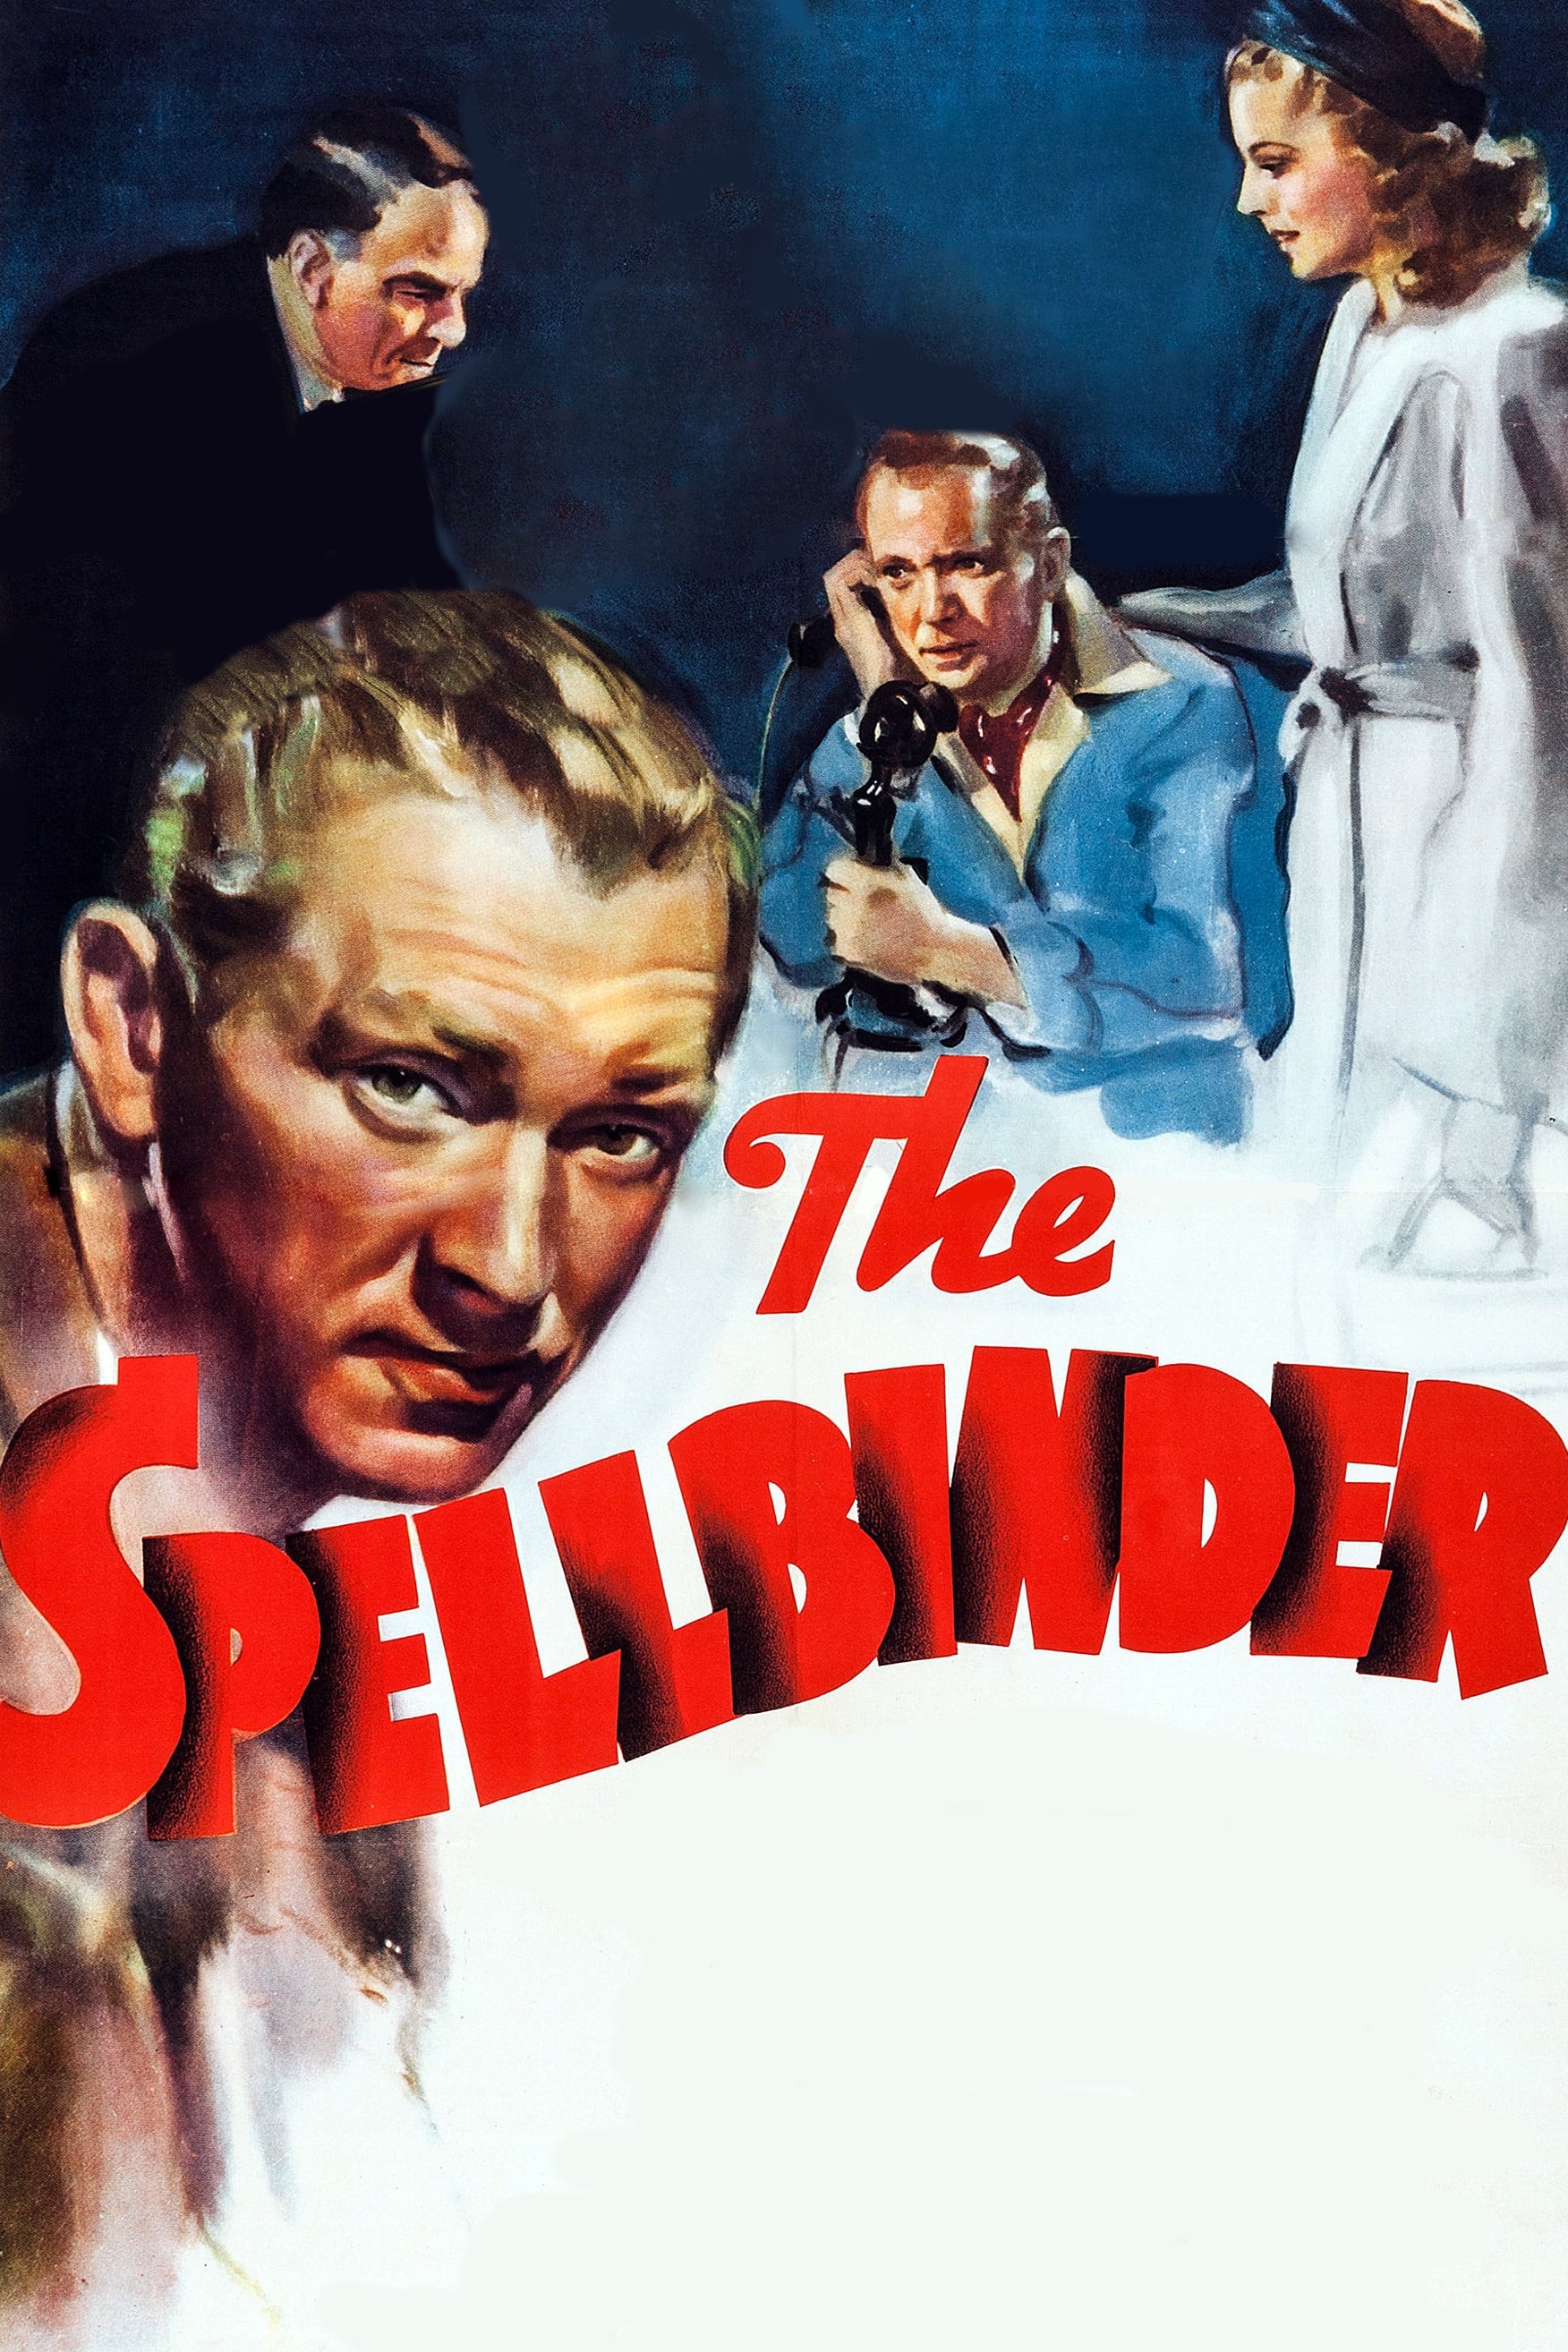 The Spellbinder (1939)